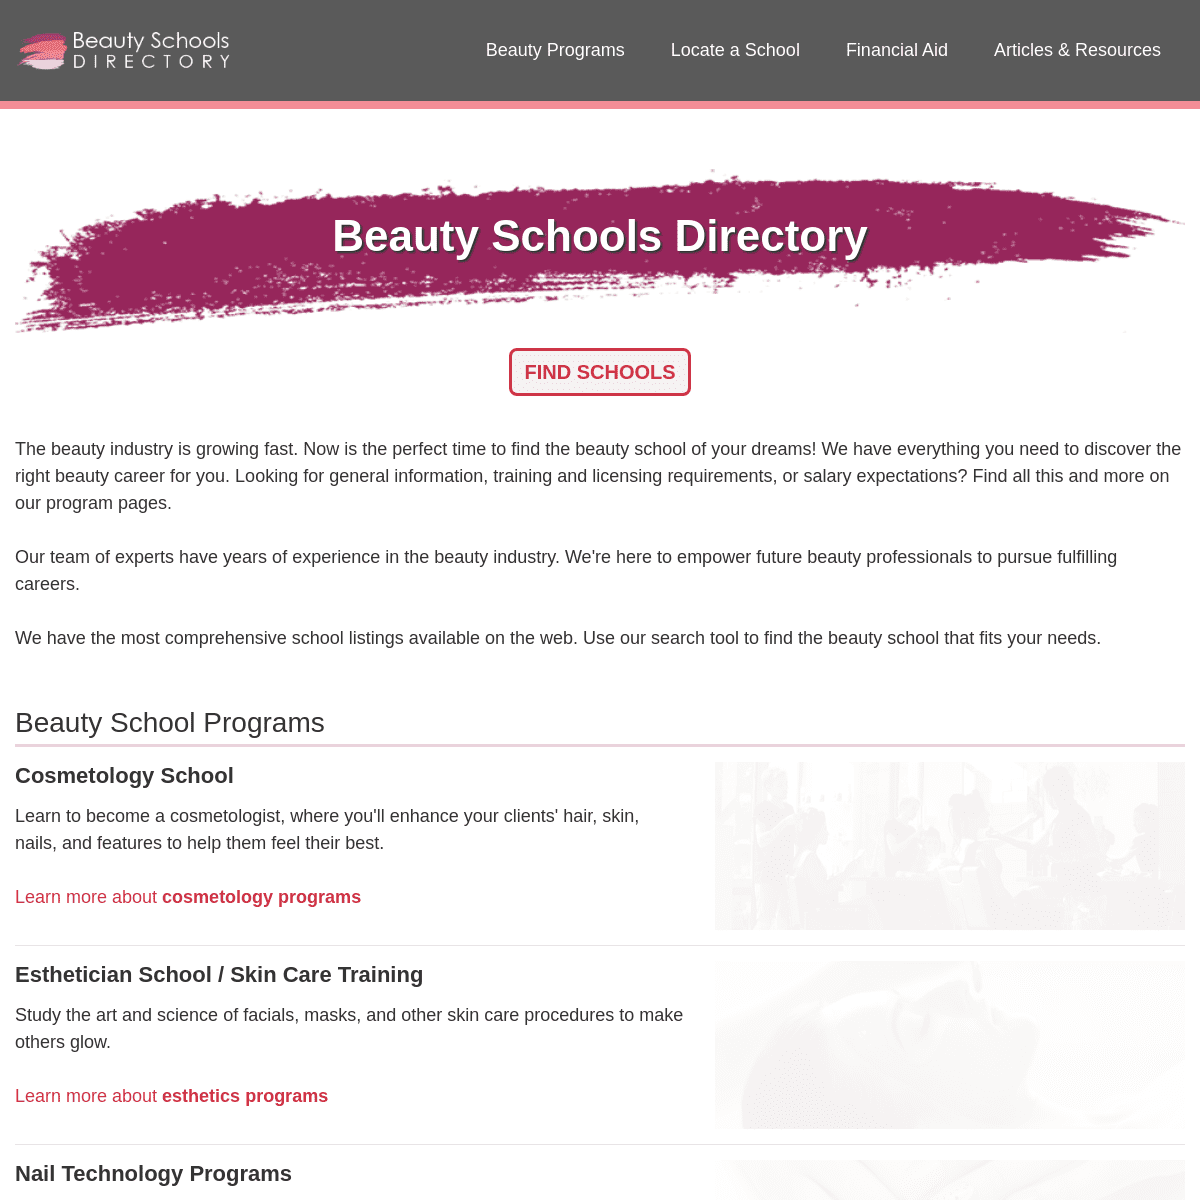 A complete backup of https://beautyschoolsdirectory.com